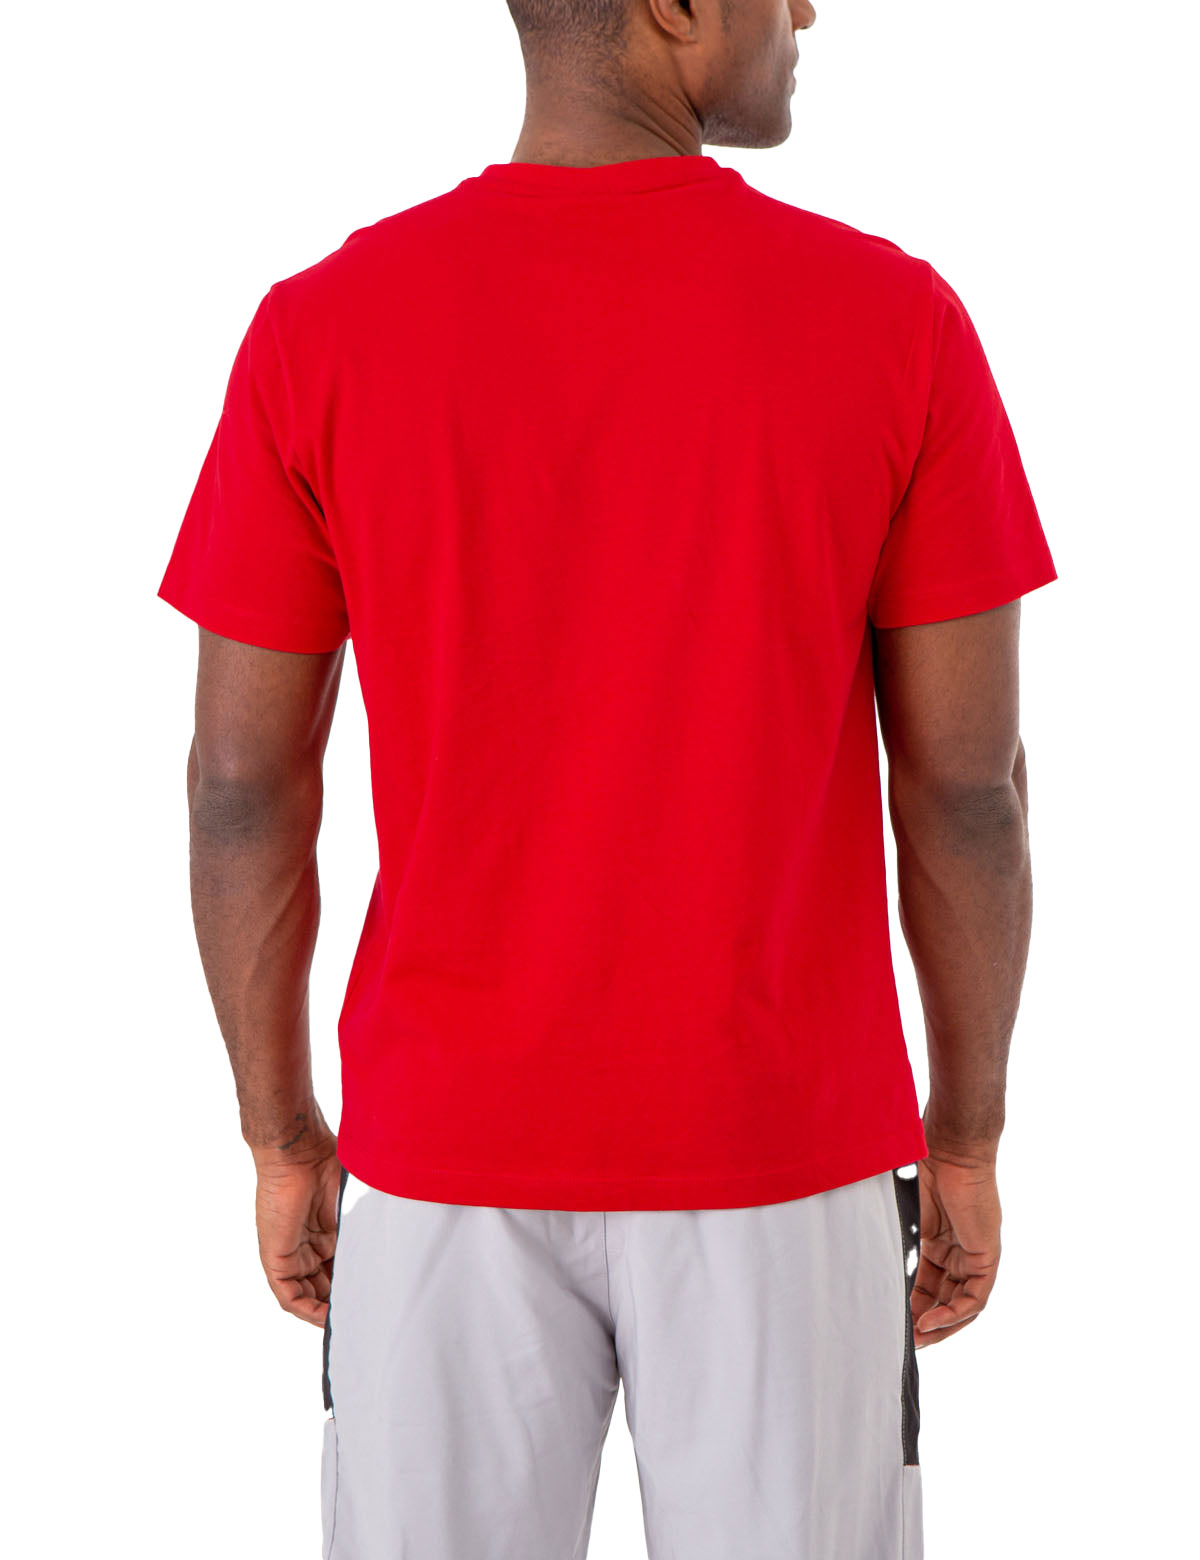 U.S. Polo Assn. Men's V-Neck T-Shirt - image 3 of 4